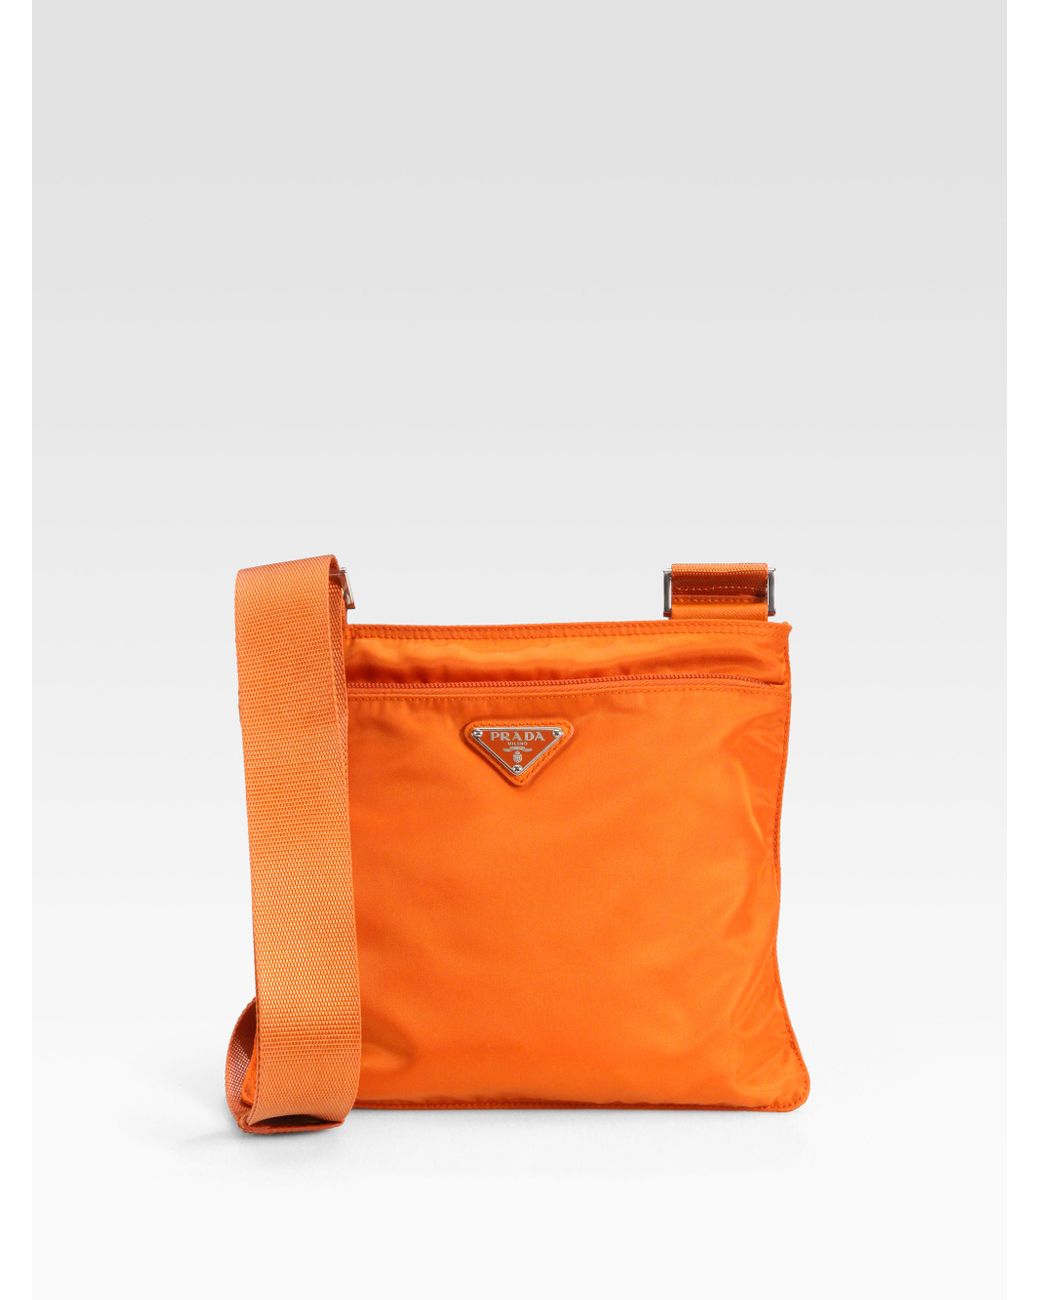 Prada Nylon Messenger Bag in Orange